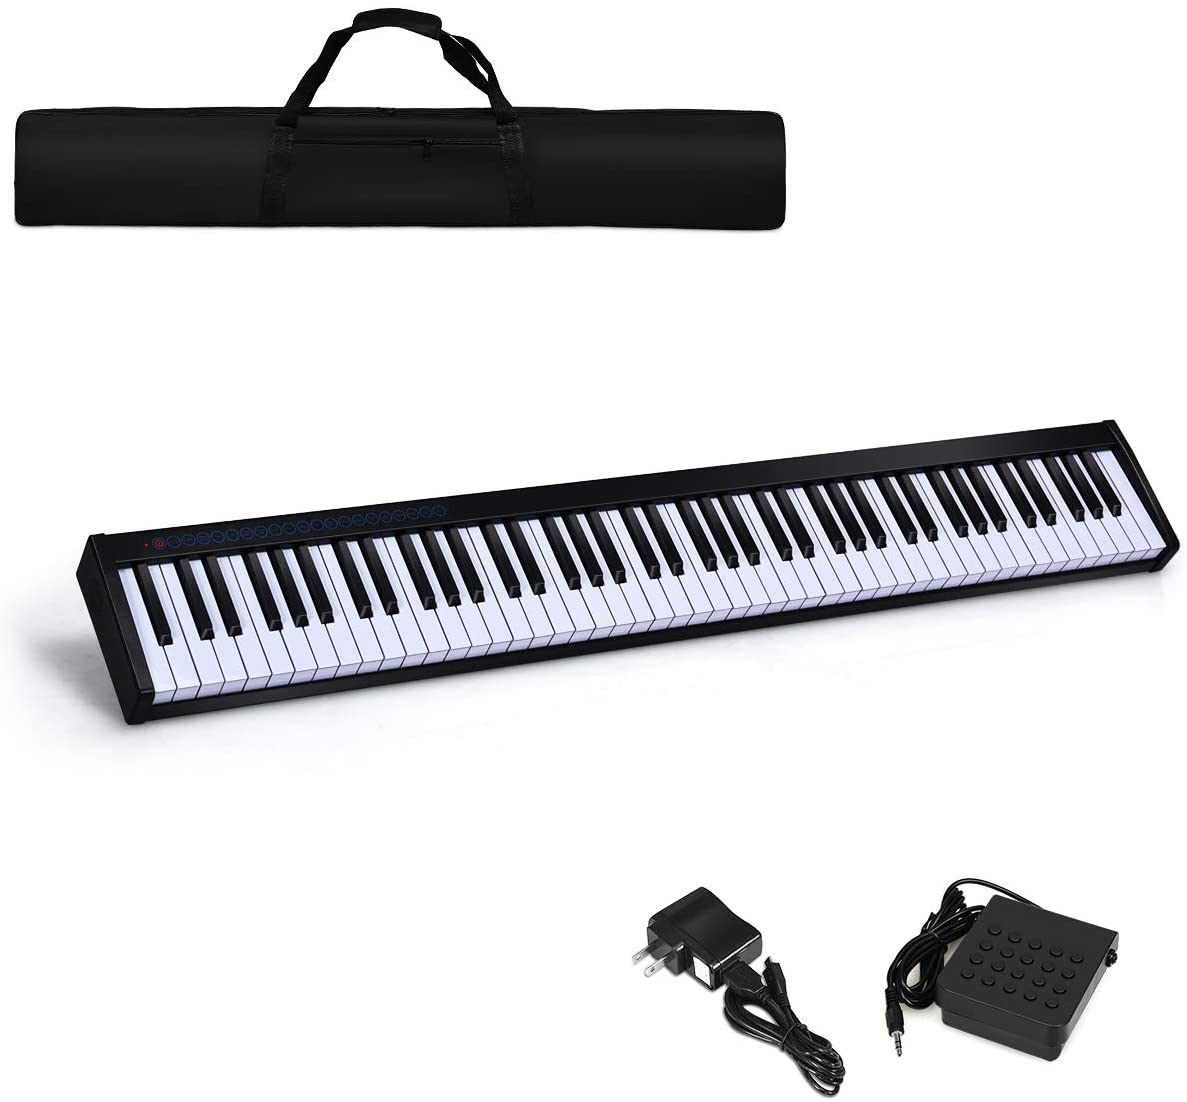 Costzon 88-Key Portable Digital Piano